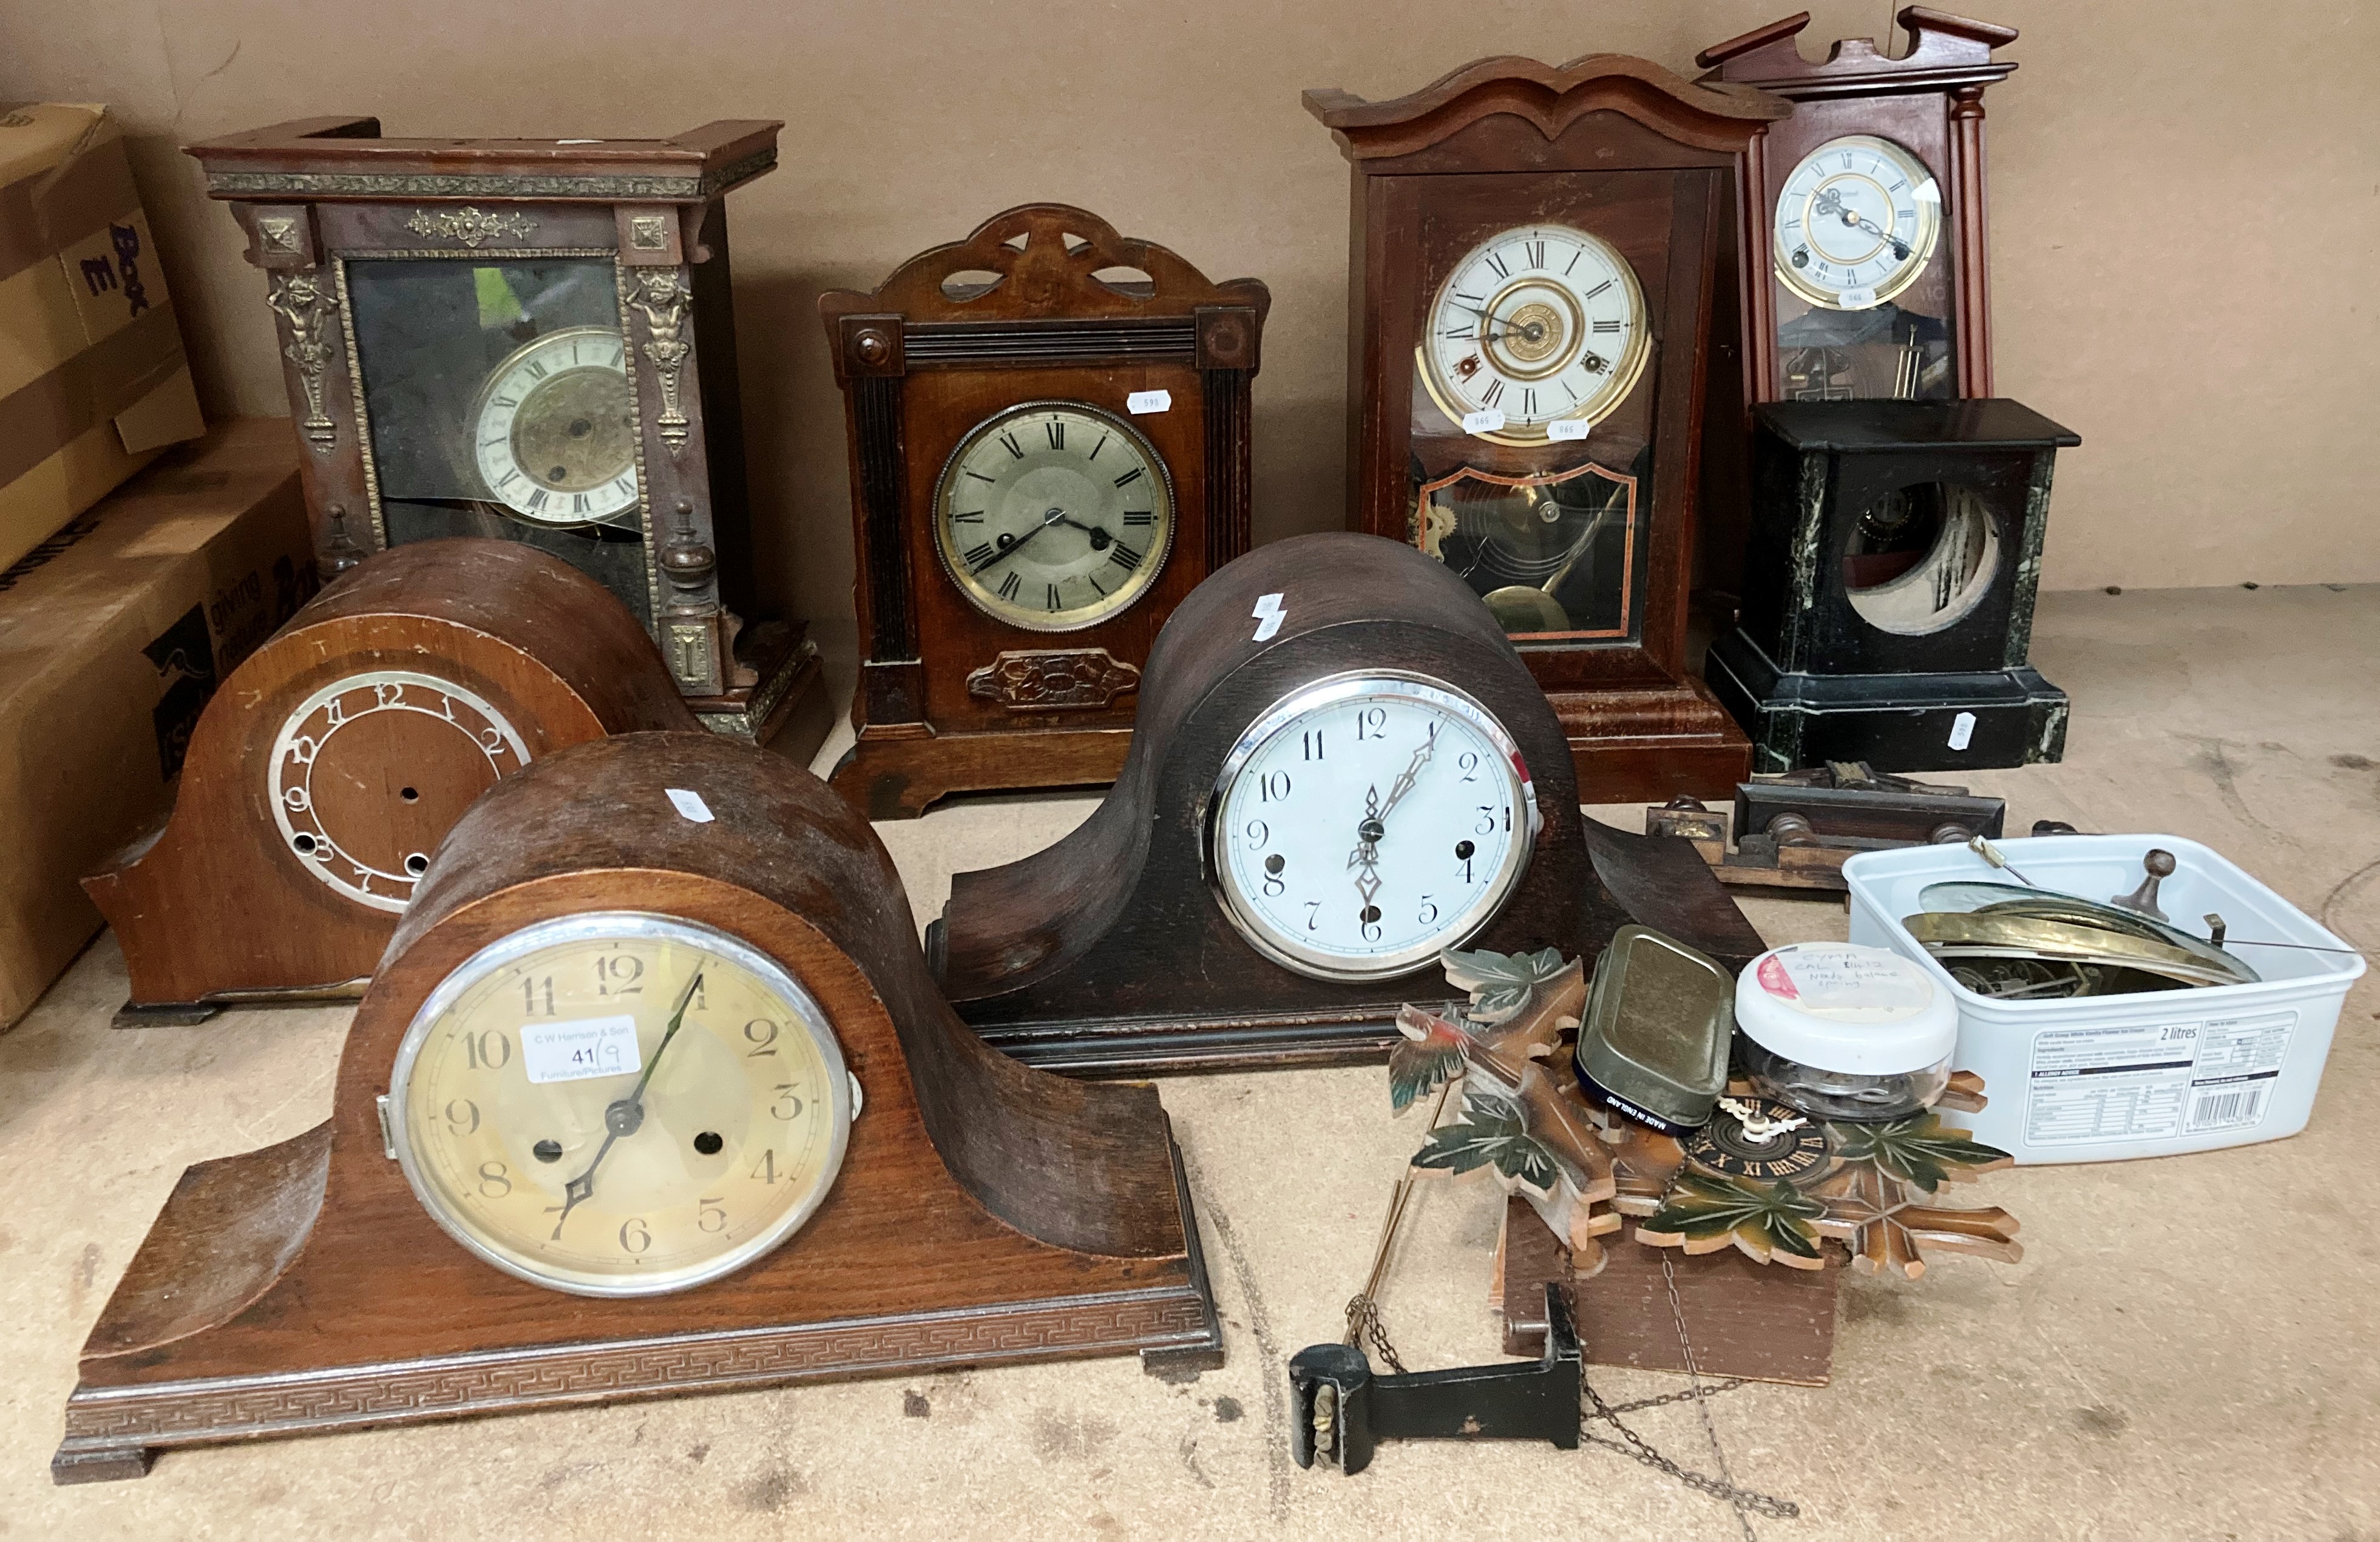 Nine various clocks and clock faces, all as seen - mantel, cuckoo etc.